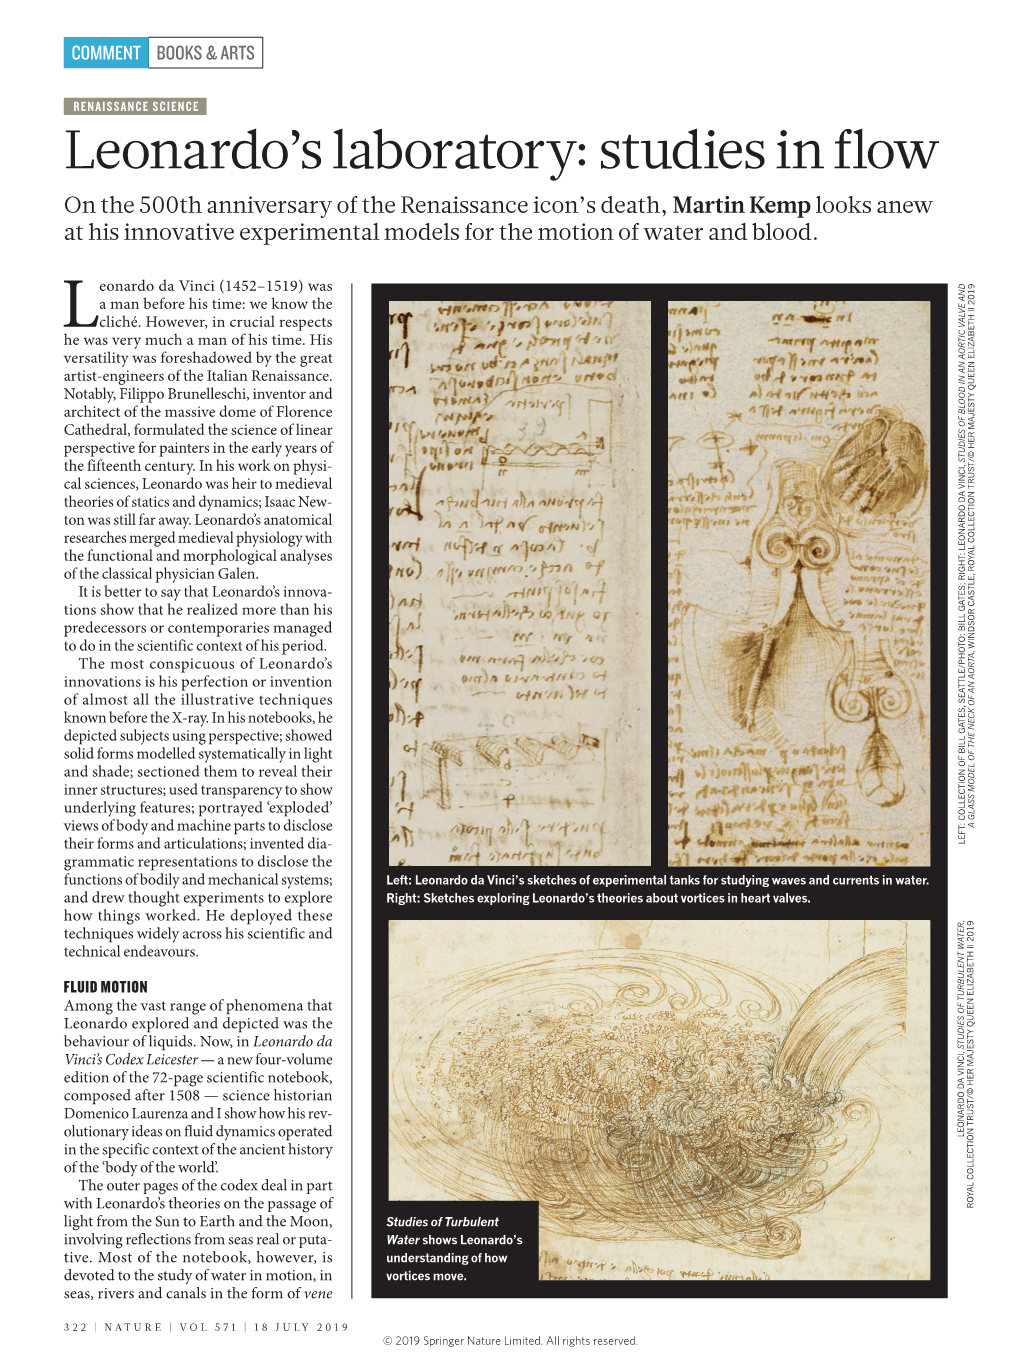 Leonardo's Laboratory: Studies in Flow